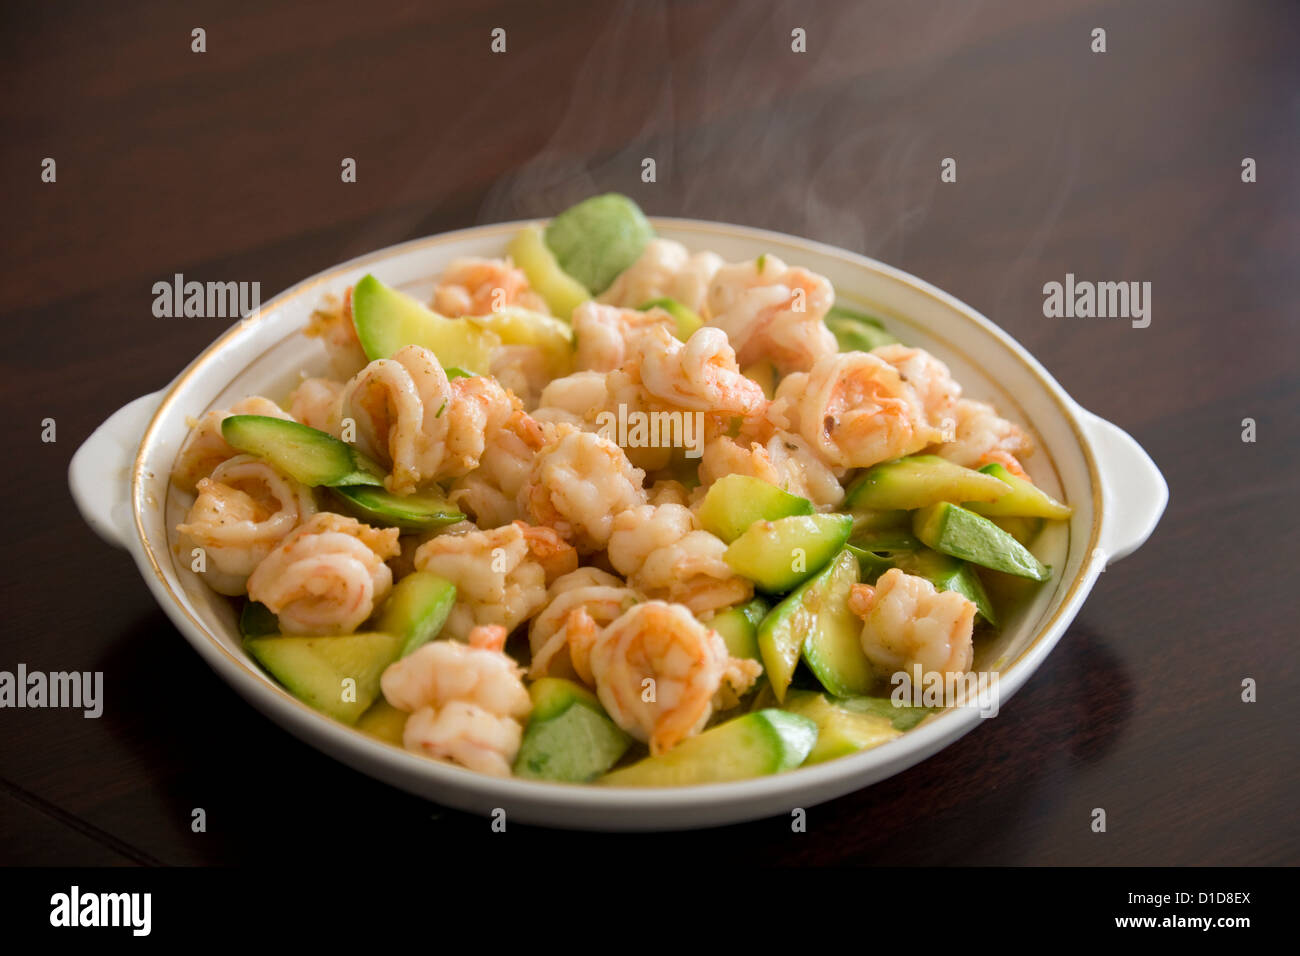 Cucina cinese - gamberi cotti con verdure Foto Stock